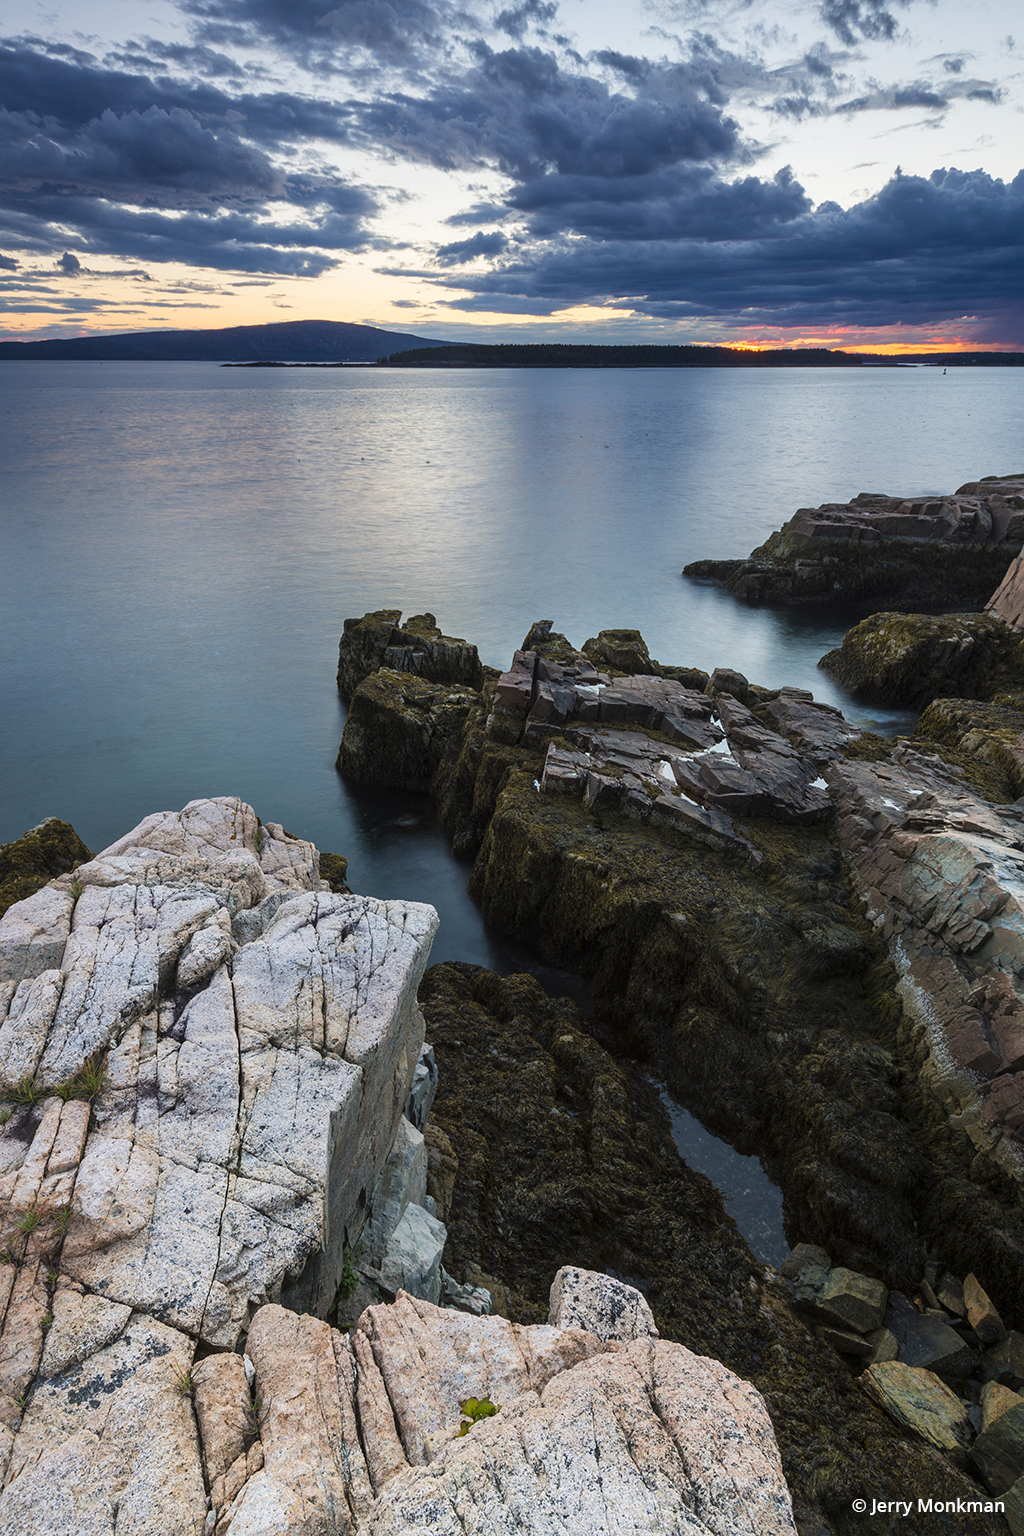 Schoodic Peninsula in Maine's Acadia National Park